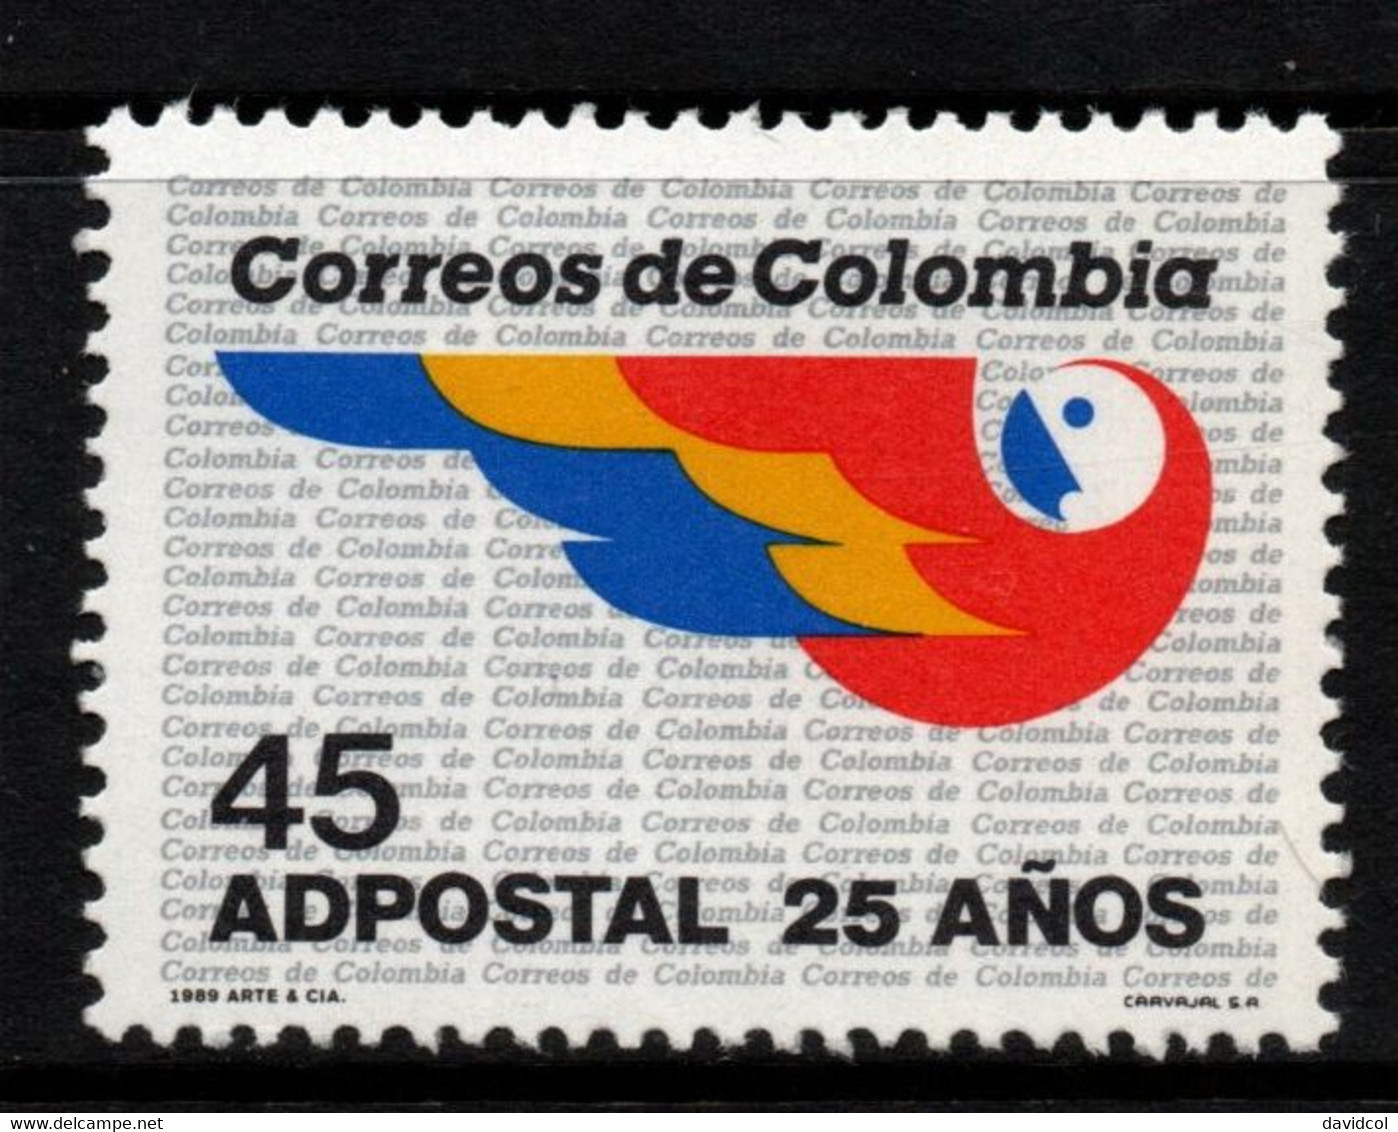 07- KOLUMBIEN - 1989 - MI#:1750 - MNH- “ADPOSTAL” NATIONAL MAIL COMPANY, 25 YEARS - Colombia